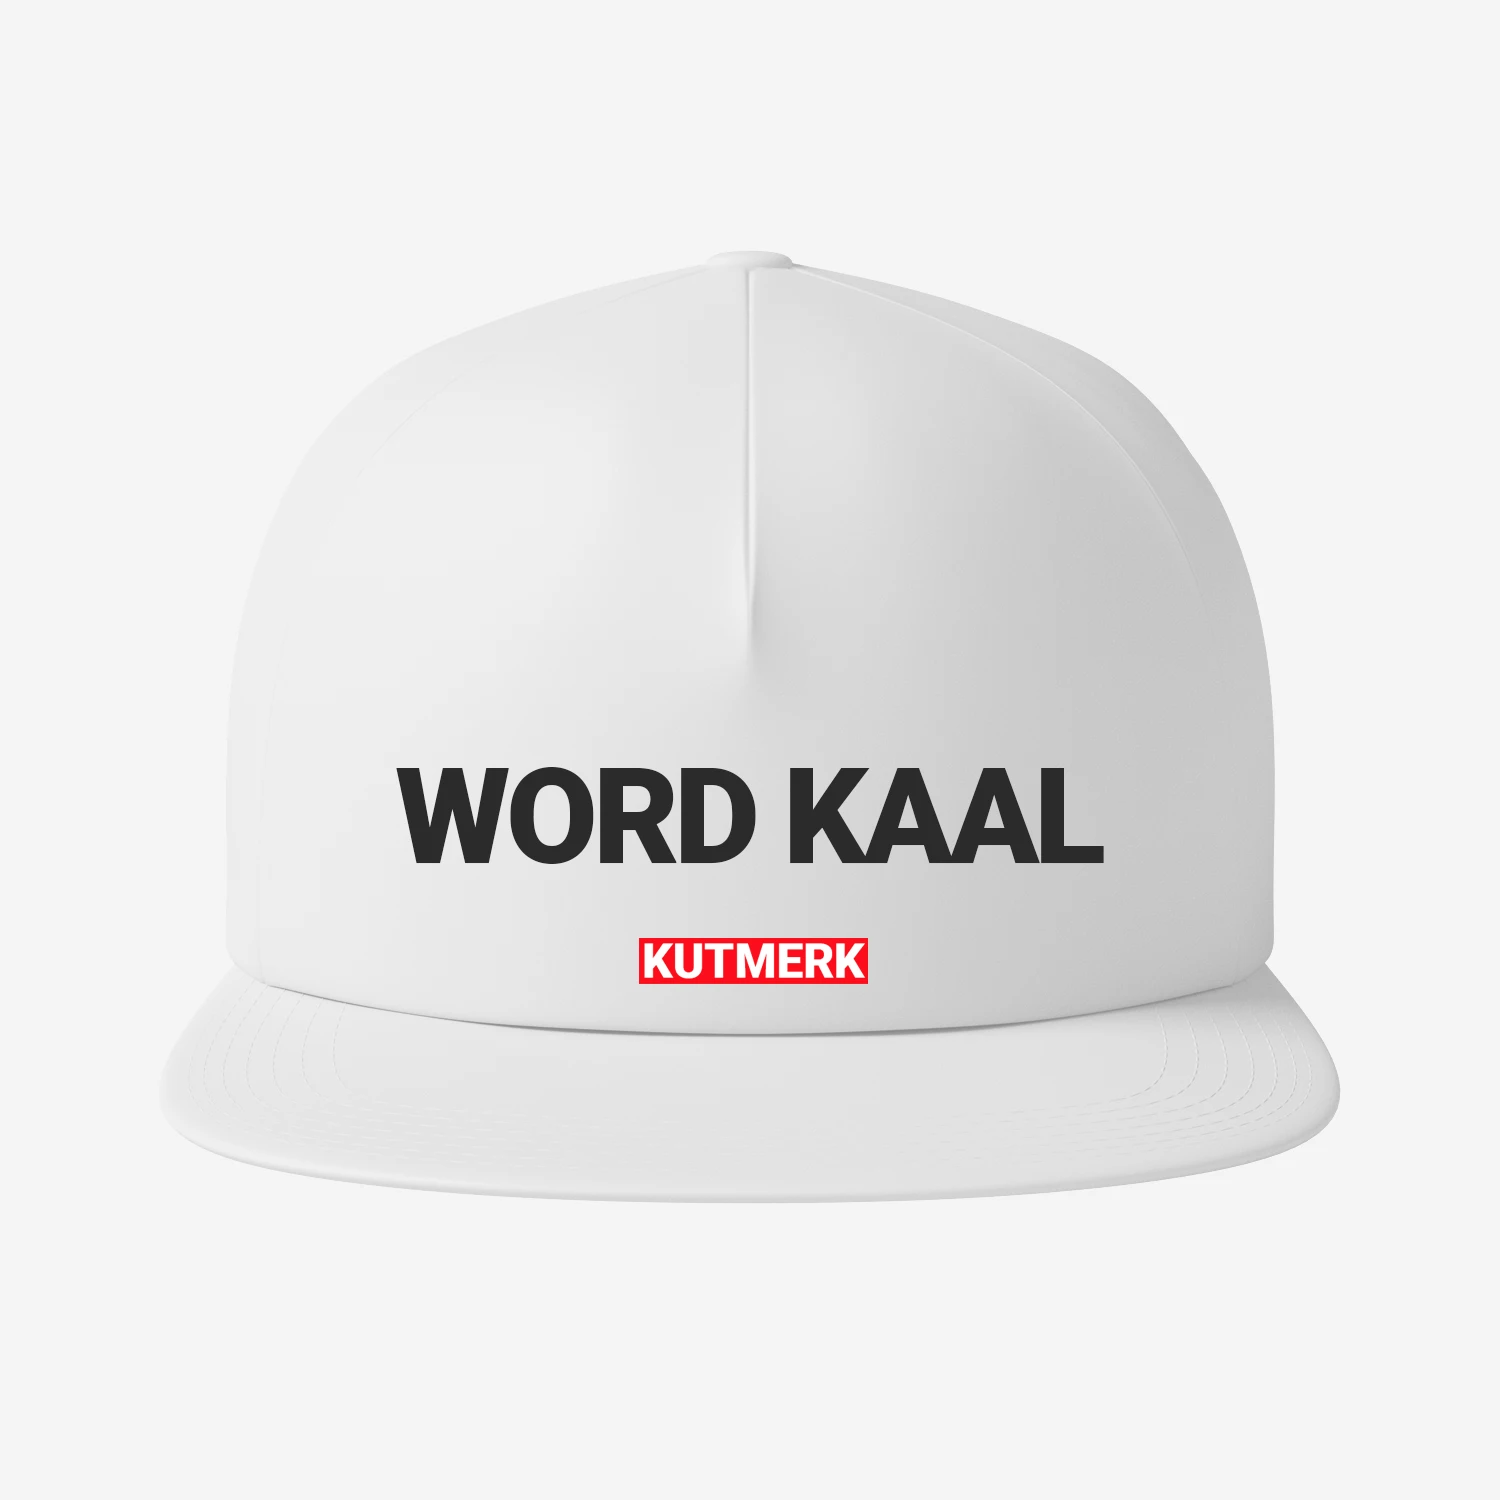 Word kaal